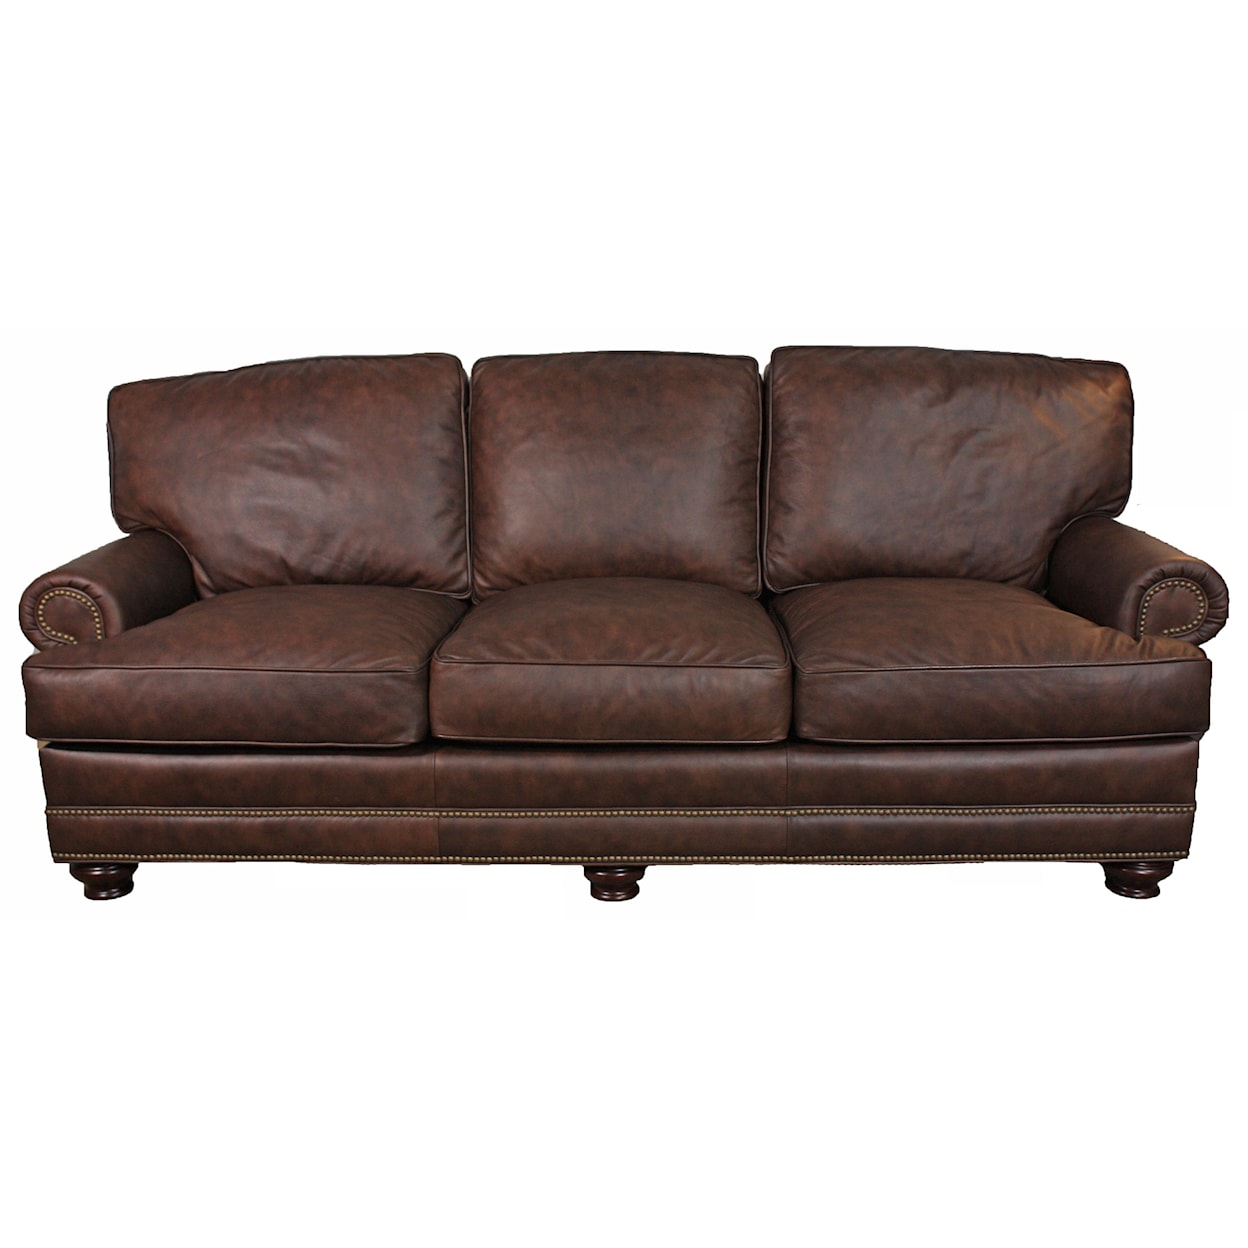 Leathercraft Garland 3 Seat Sofa